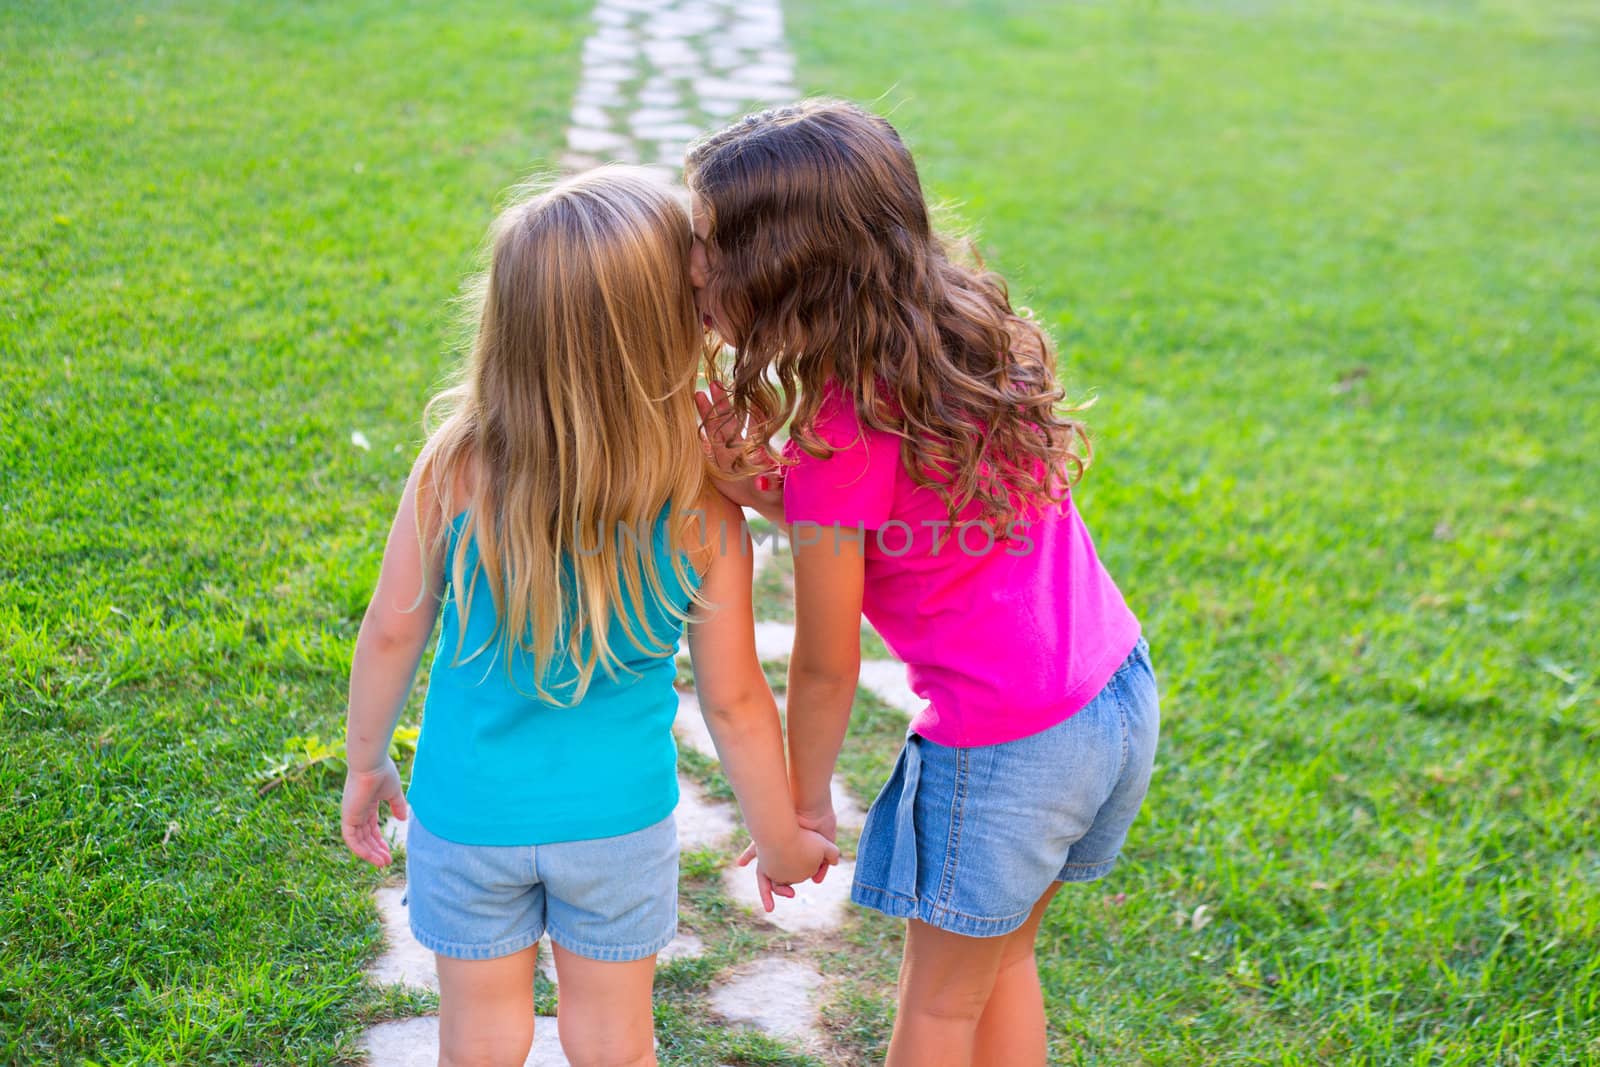 friends sister girls whispering secret in ear in grass garden track park outdoor